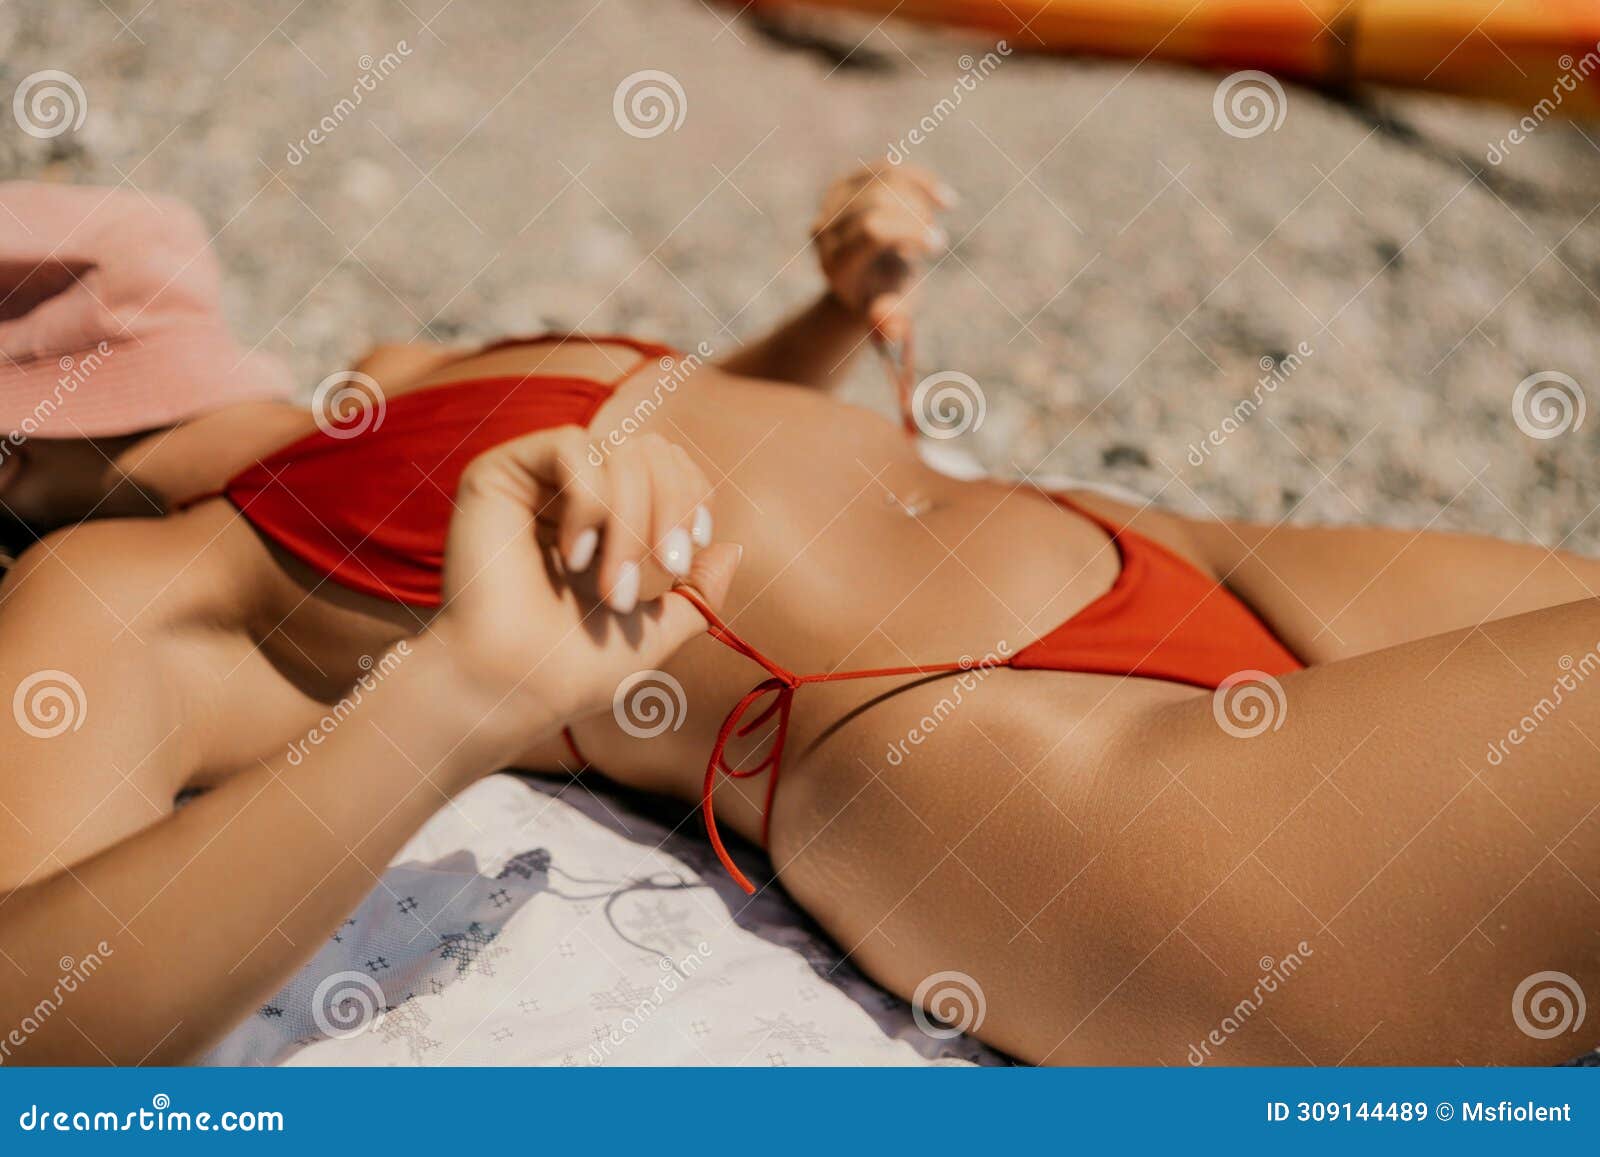 112 Taking Bikini Off Stock Photos - Free & Royalty-Free Stock Photos from  Dreamstime